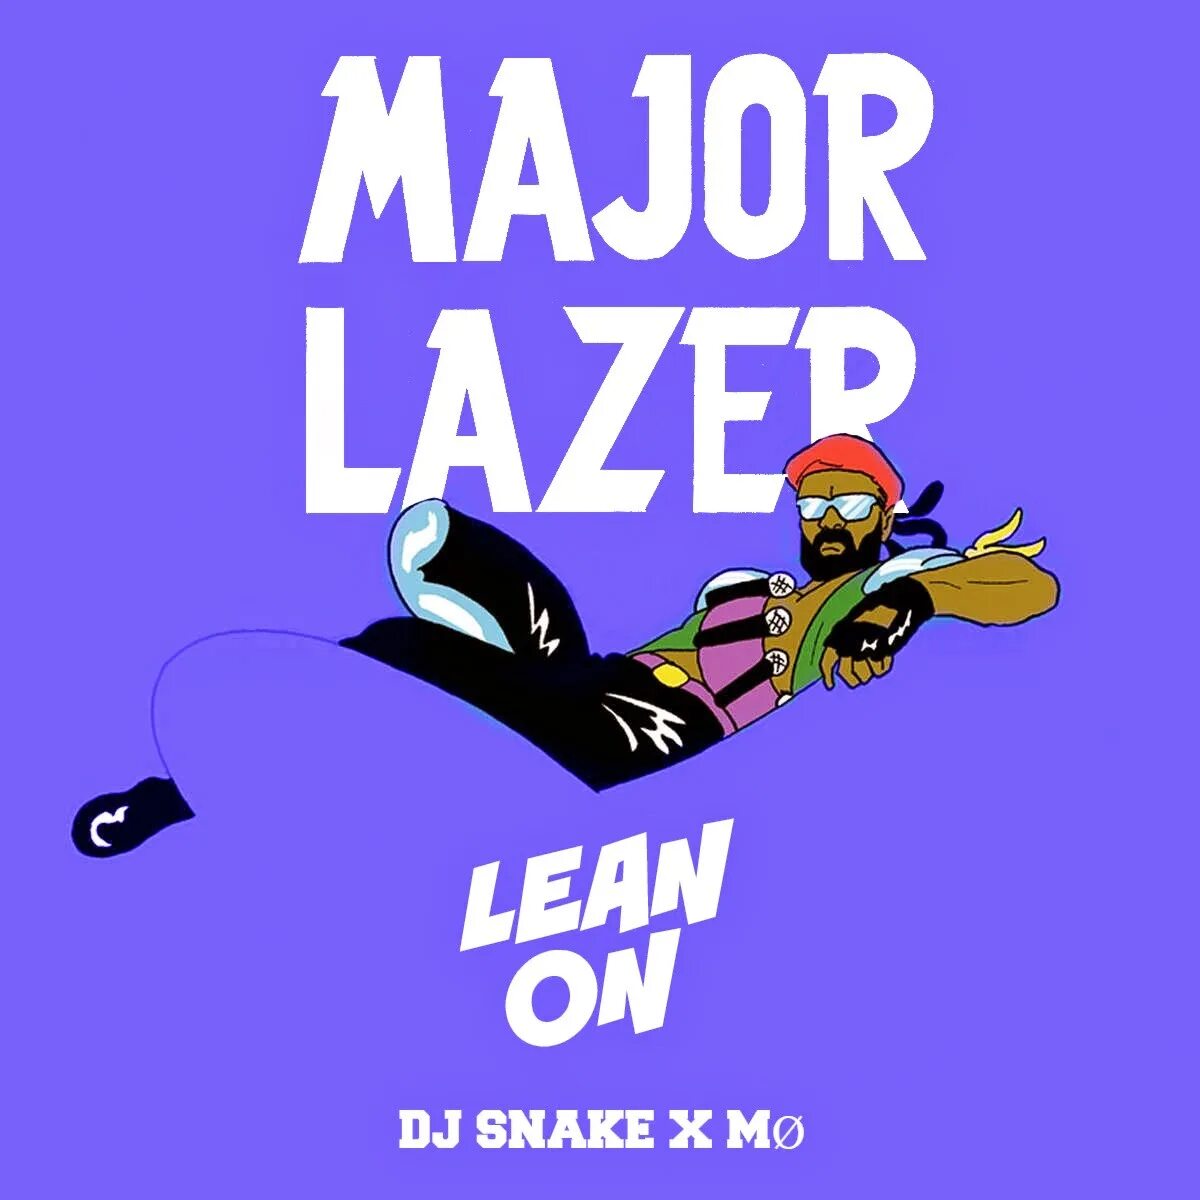 Dj snake feat. Major Lazer обложка. Major Lazer, DJ Snake, MØ. Leon on Major Lazer. Major Lazer Lean on обложка.